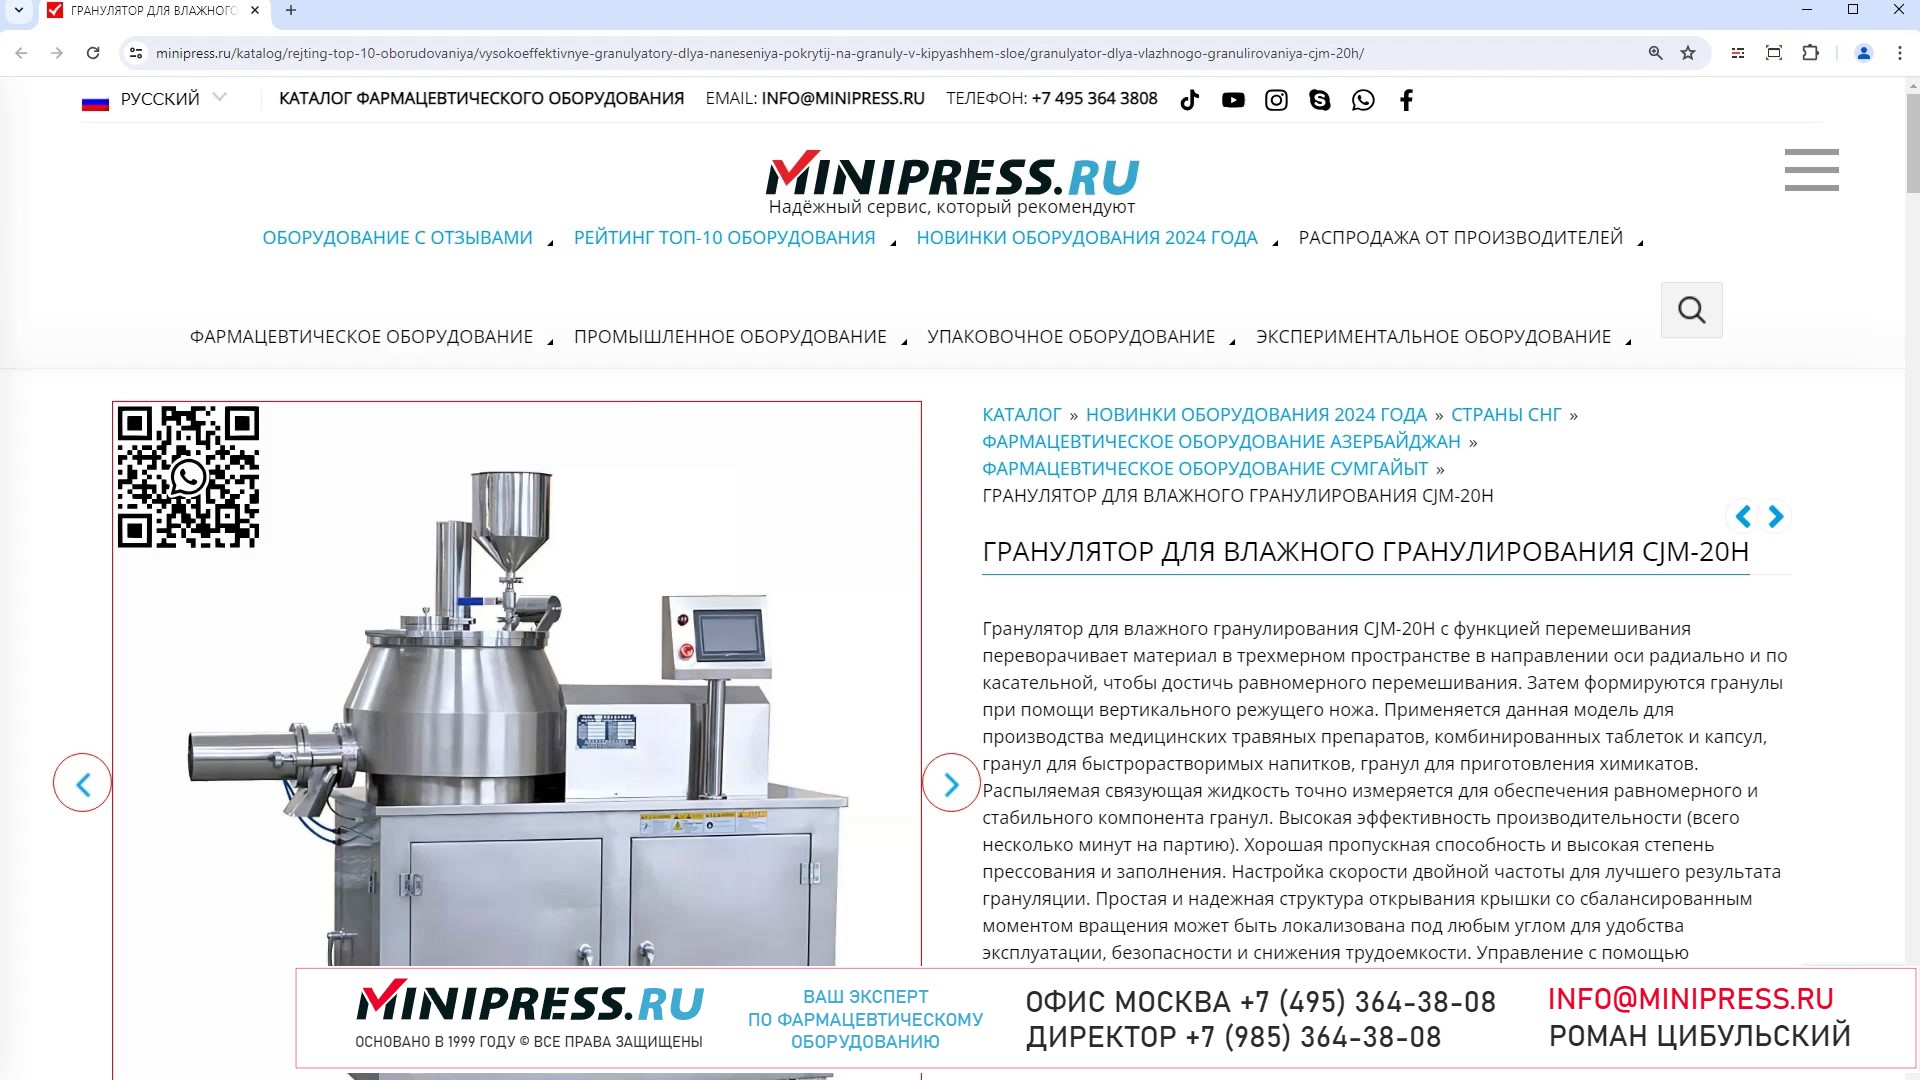 Minipress.ru Гранулятор для влажного гранулирования CJM-20H